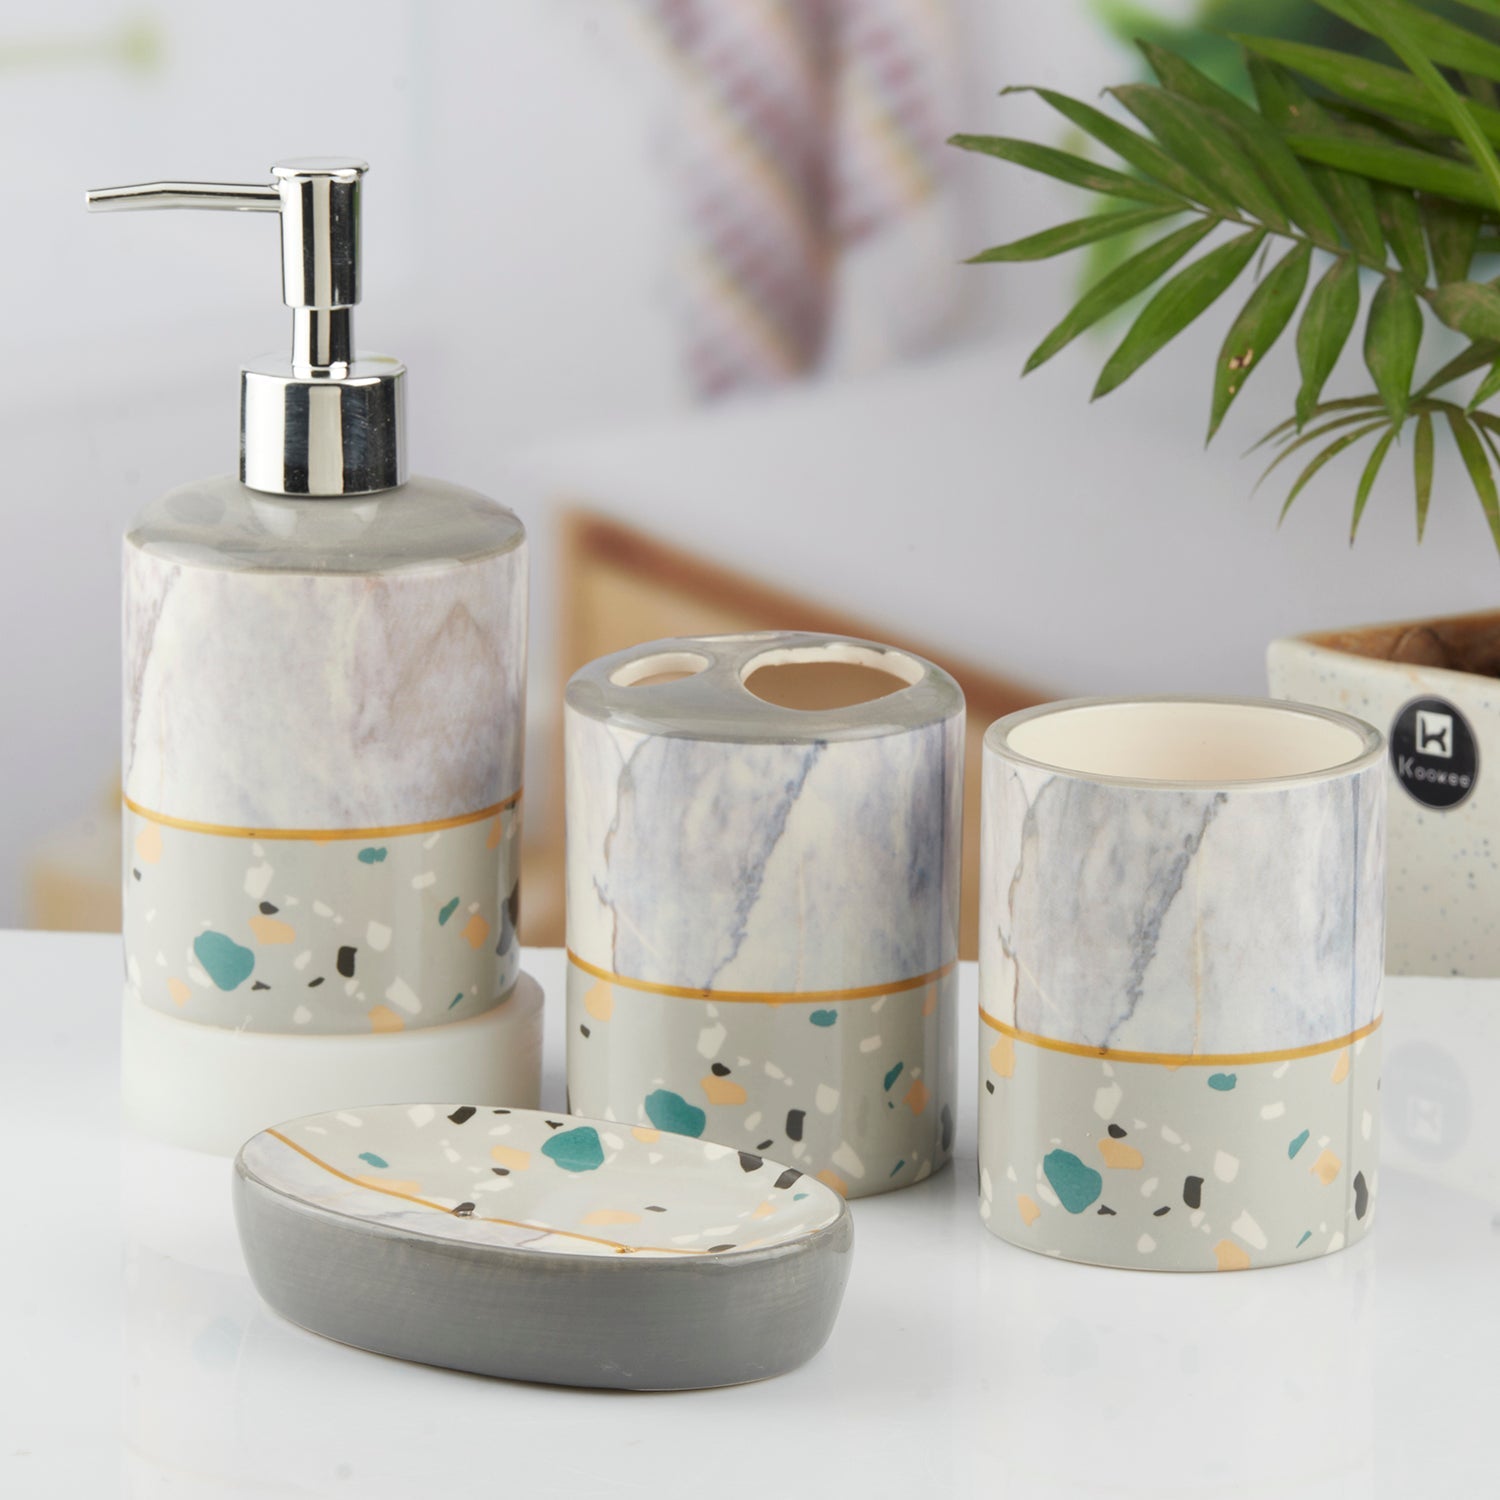 Ceramic Bathroom Accessories Set of 4 Bath Set with Soap Dispenser (8474)